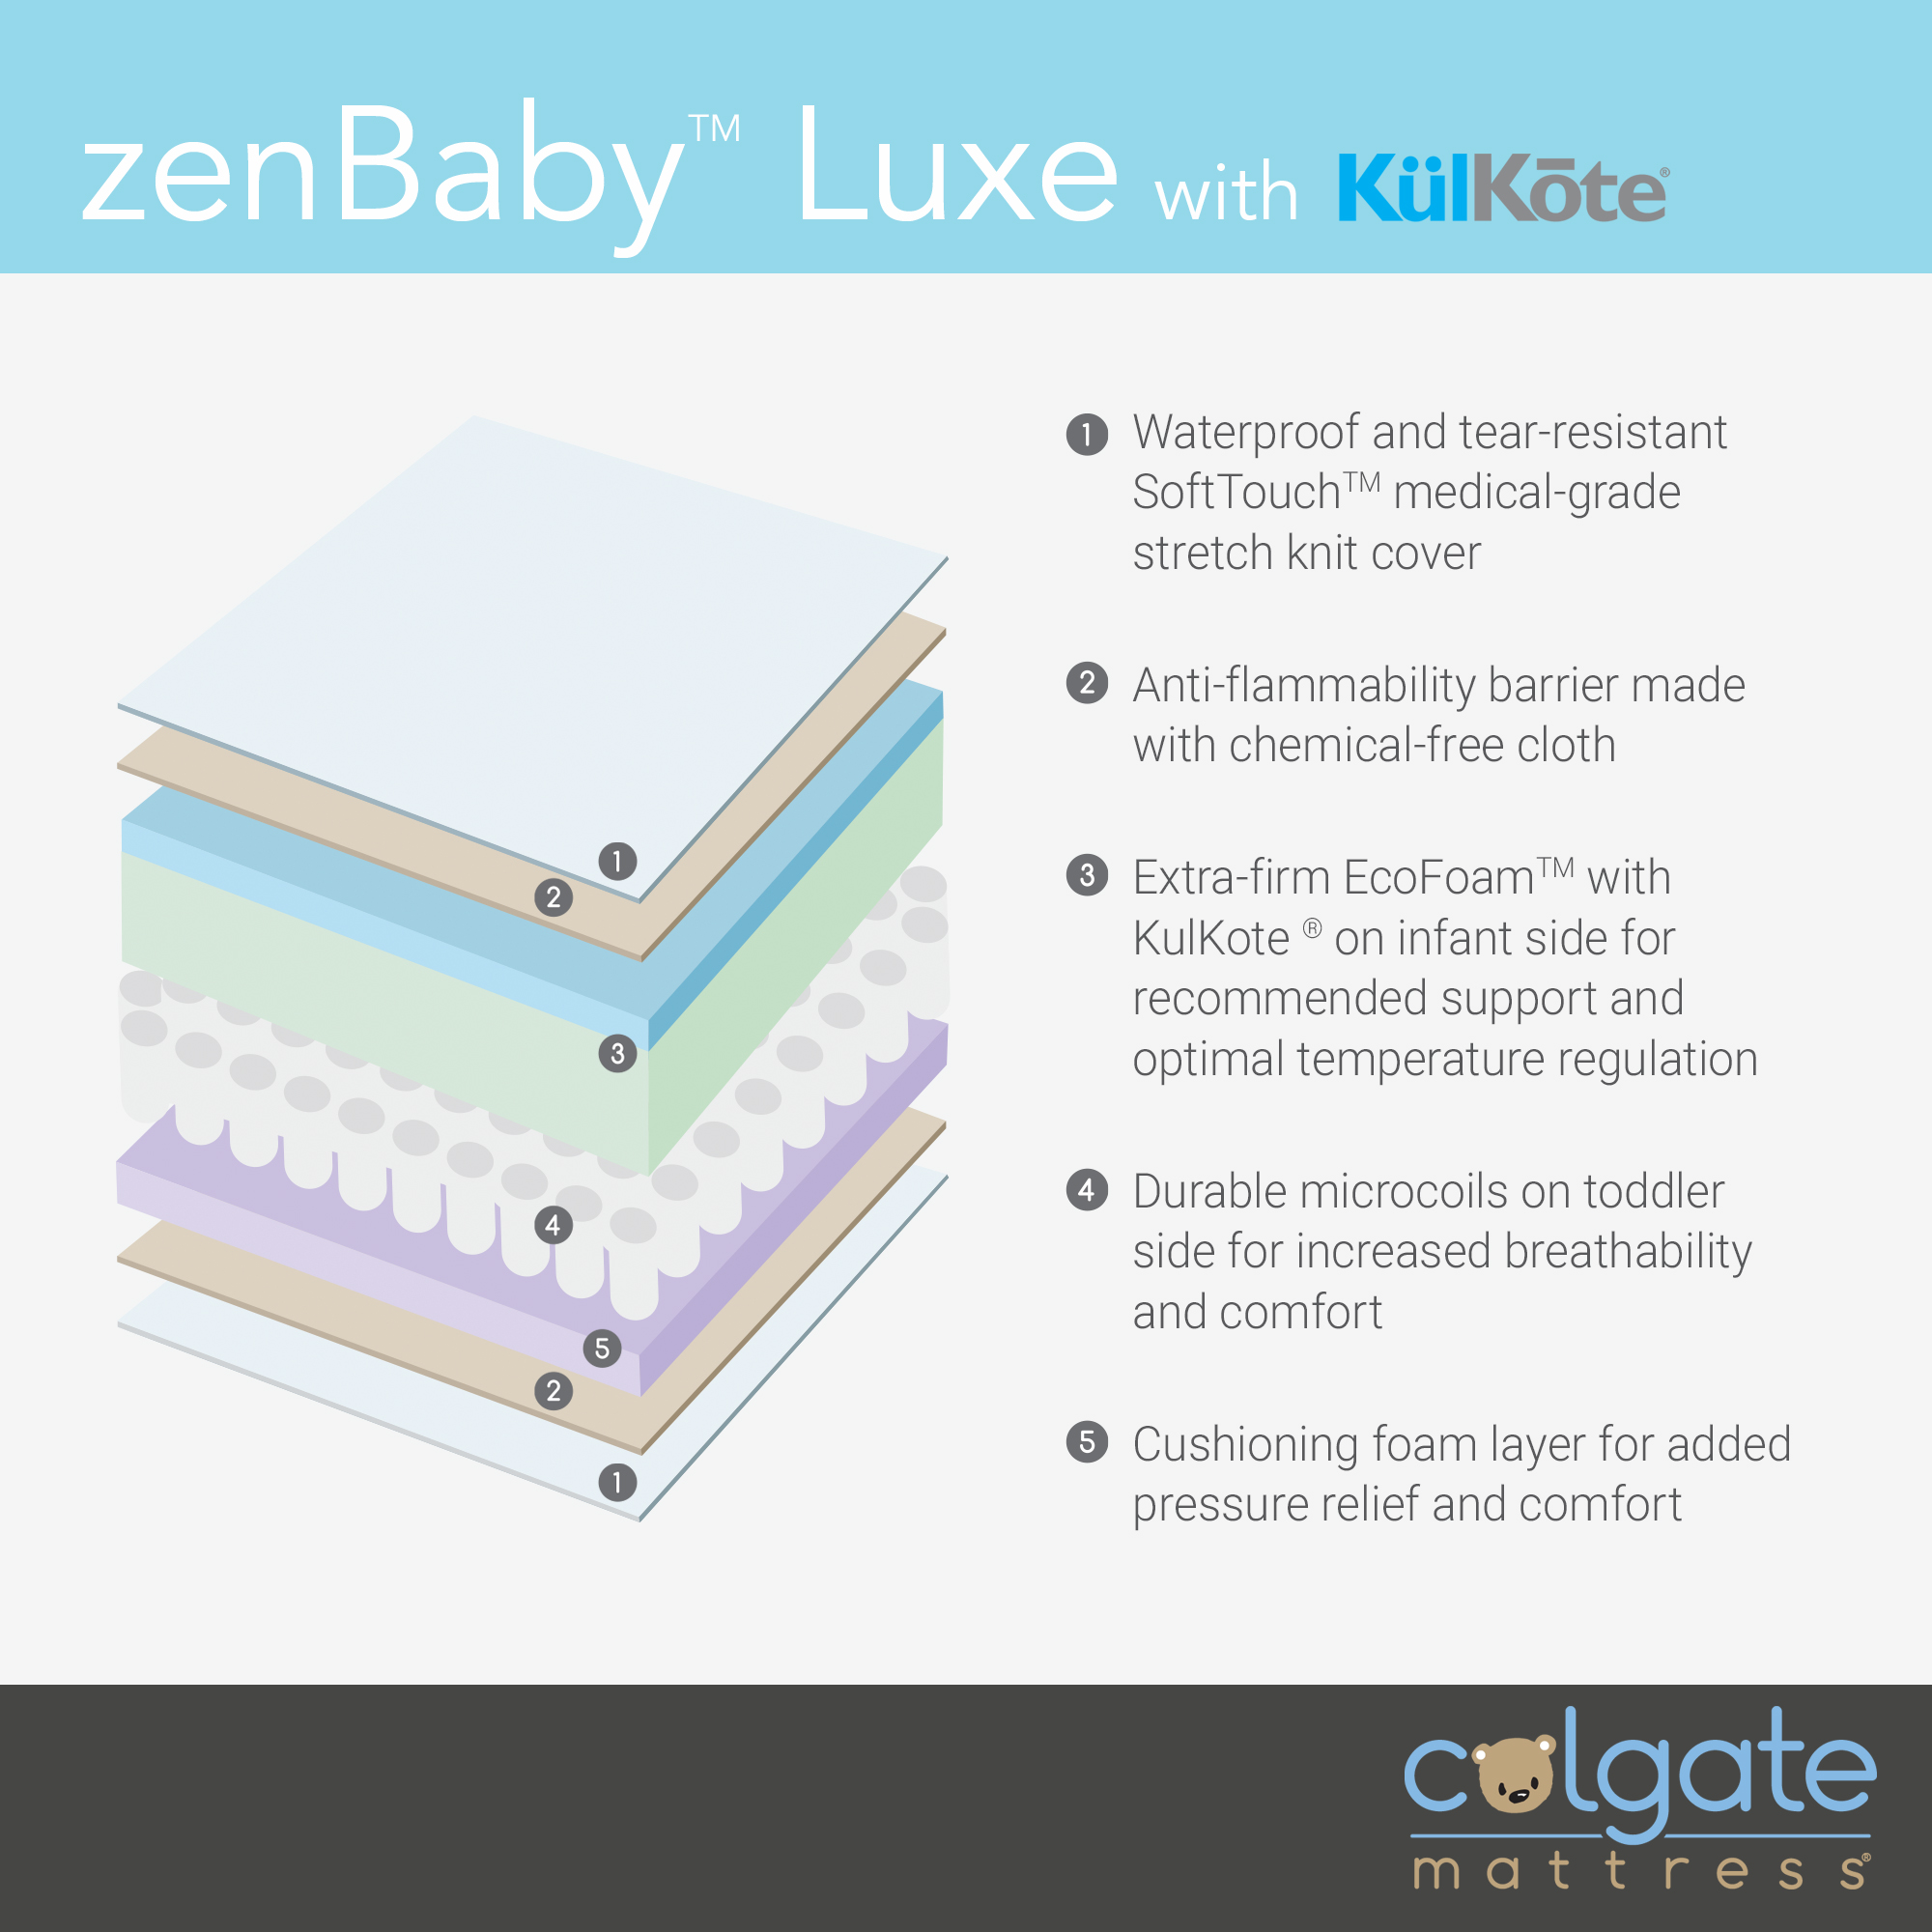 Colgate ZenBaby Luxe Hybrid 2-in-1 Crib Mattress